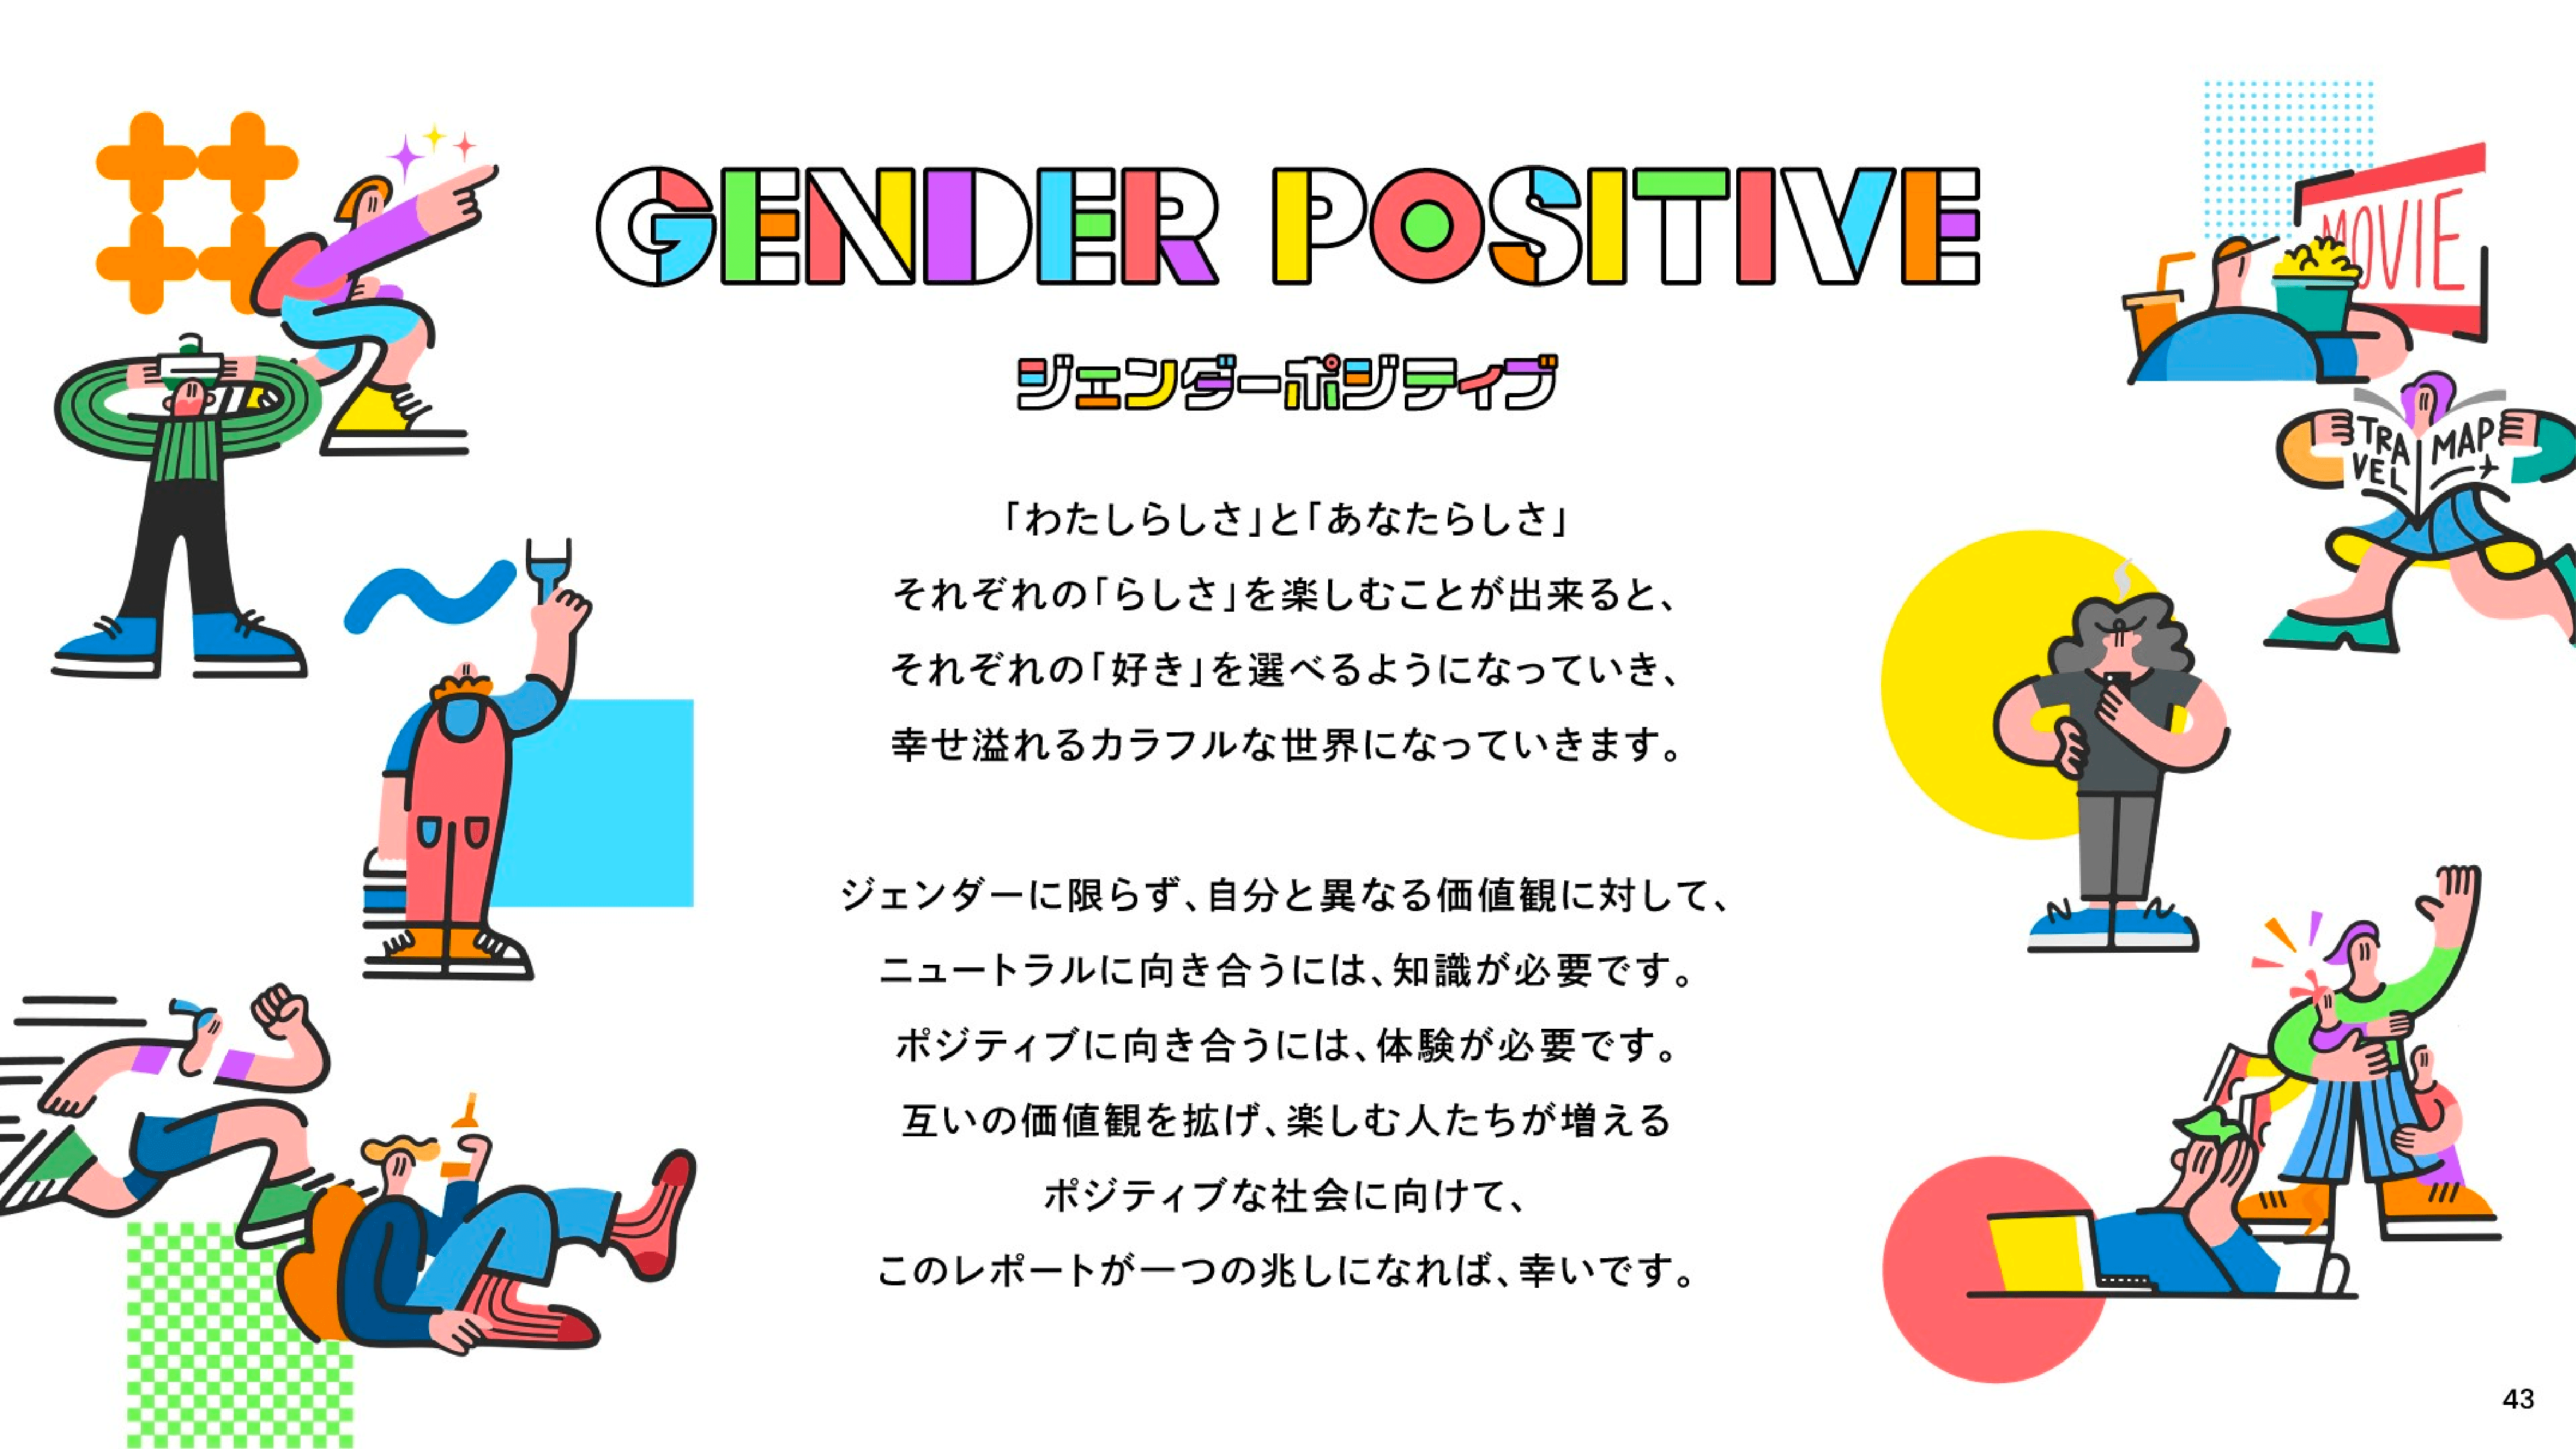 GENDER POSITIVE REPORT～ジェンダーポジティブレポート～

